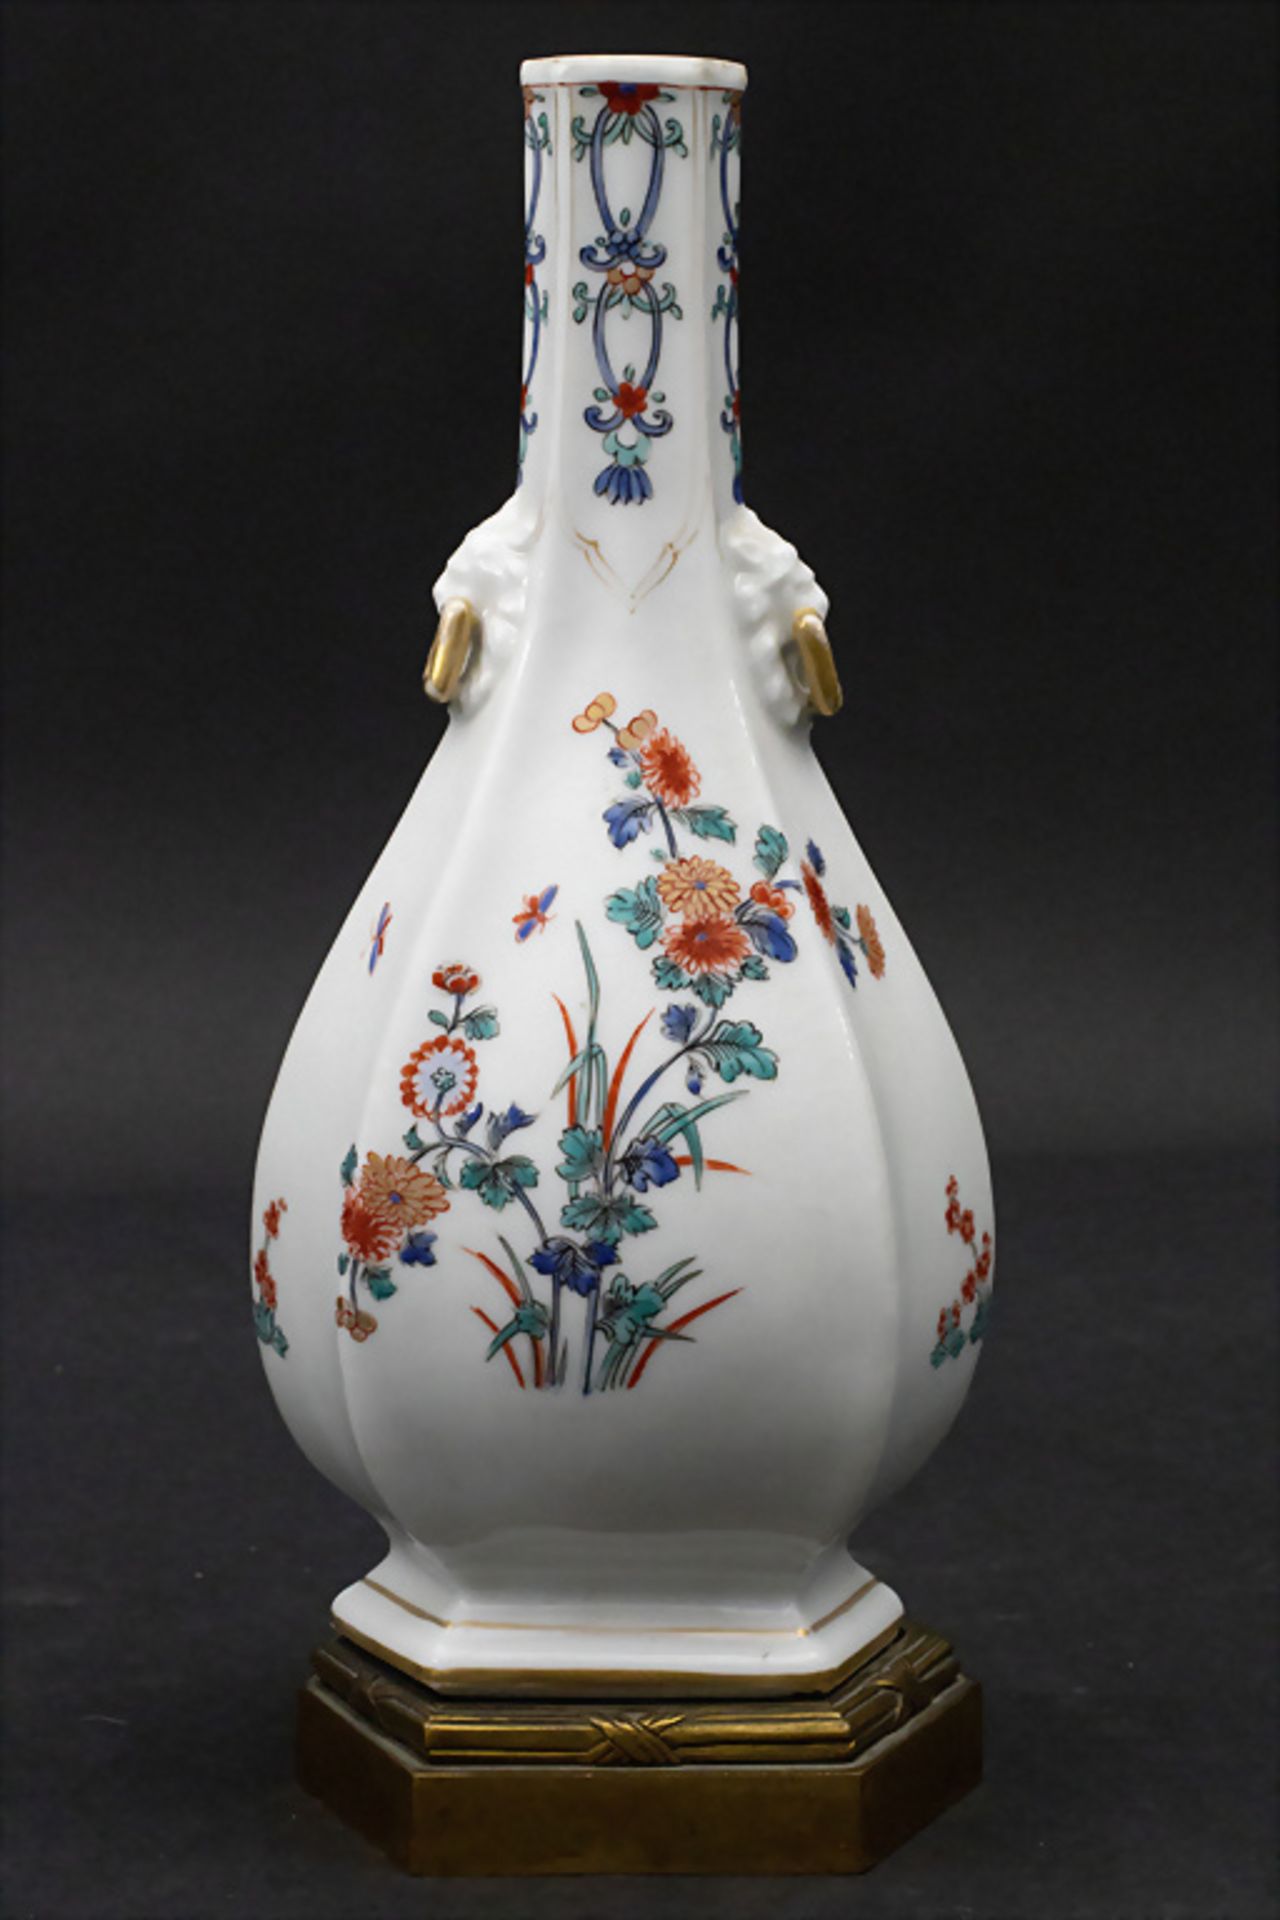 Kakiemon Deckelvasen-Paar / A pair of Kakiemon lidded vases, wohl Meissen oder Chantilly, 18. Jh. - Image 7 of 12